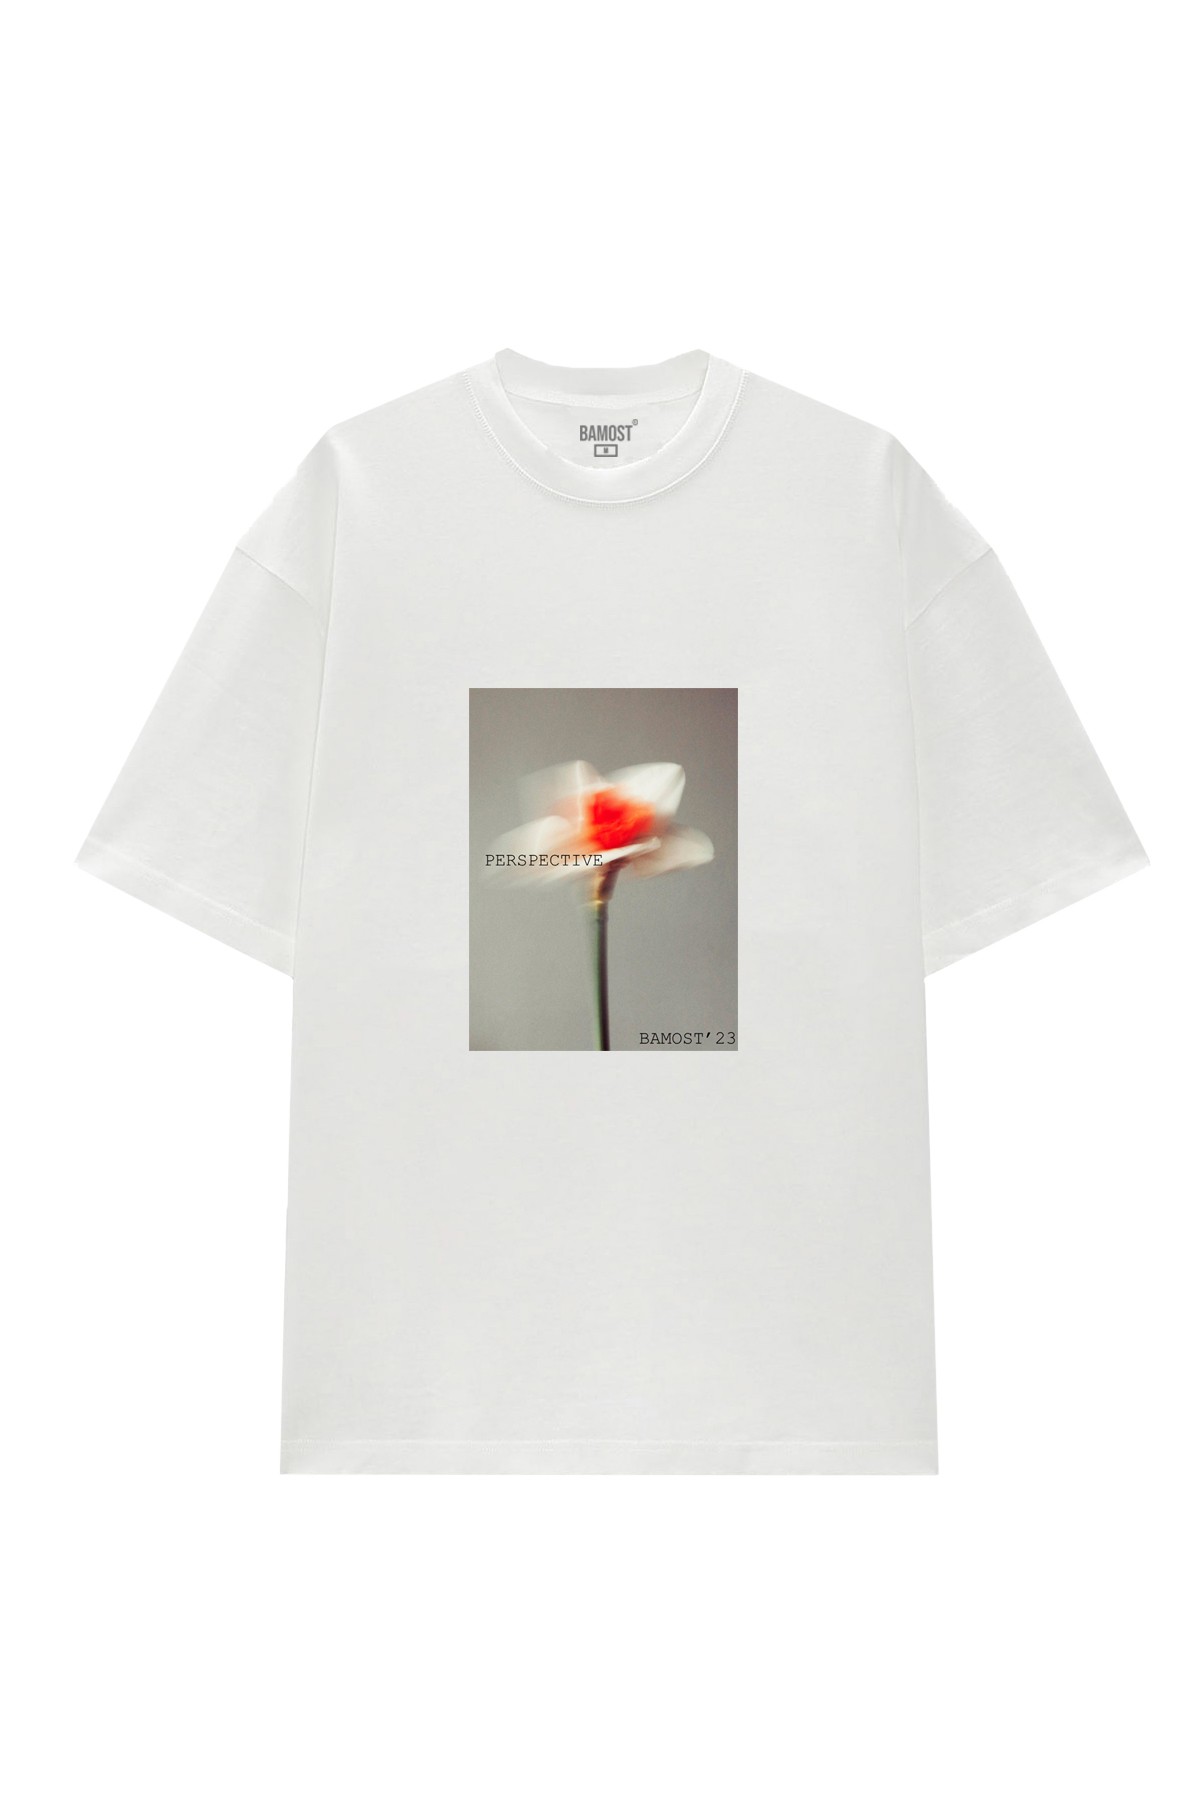 Perspective'2 - Unisex Oversize T-Shirt - WHITE